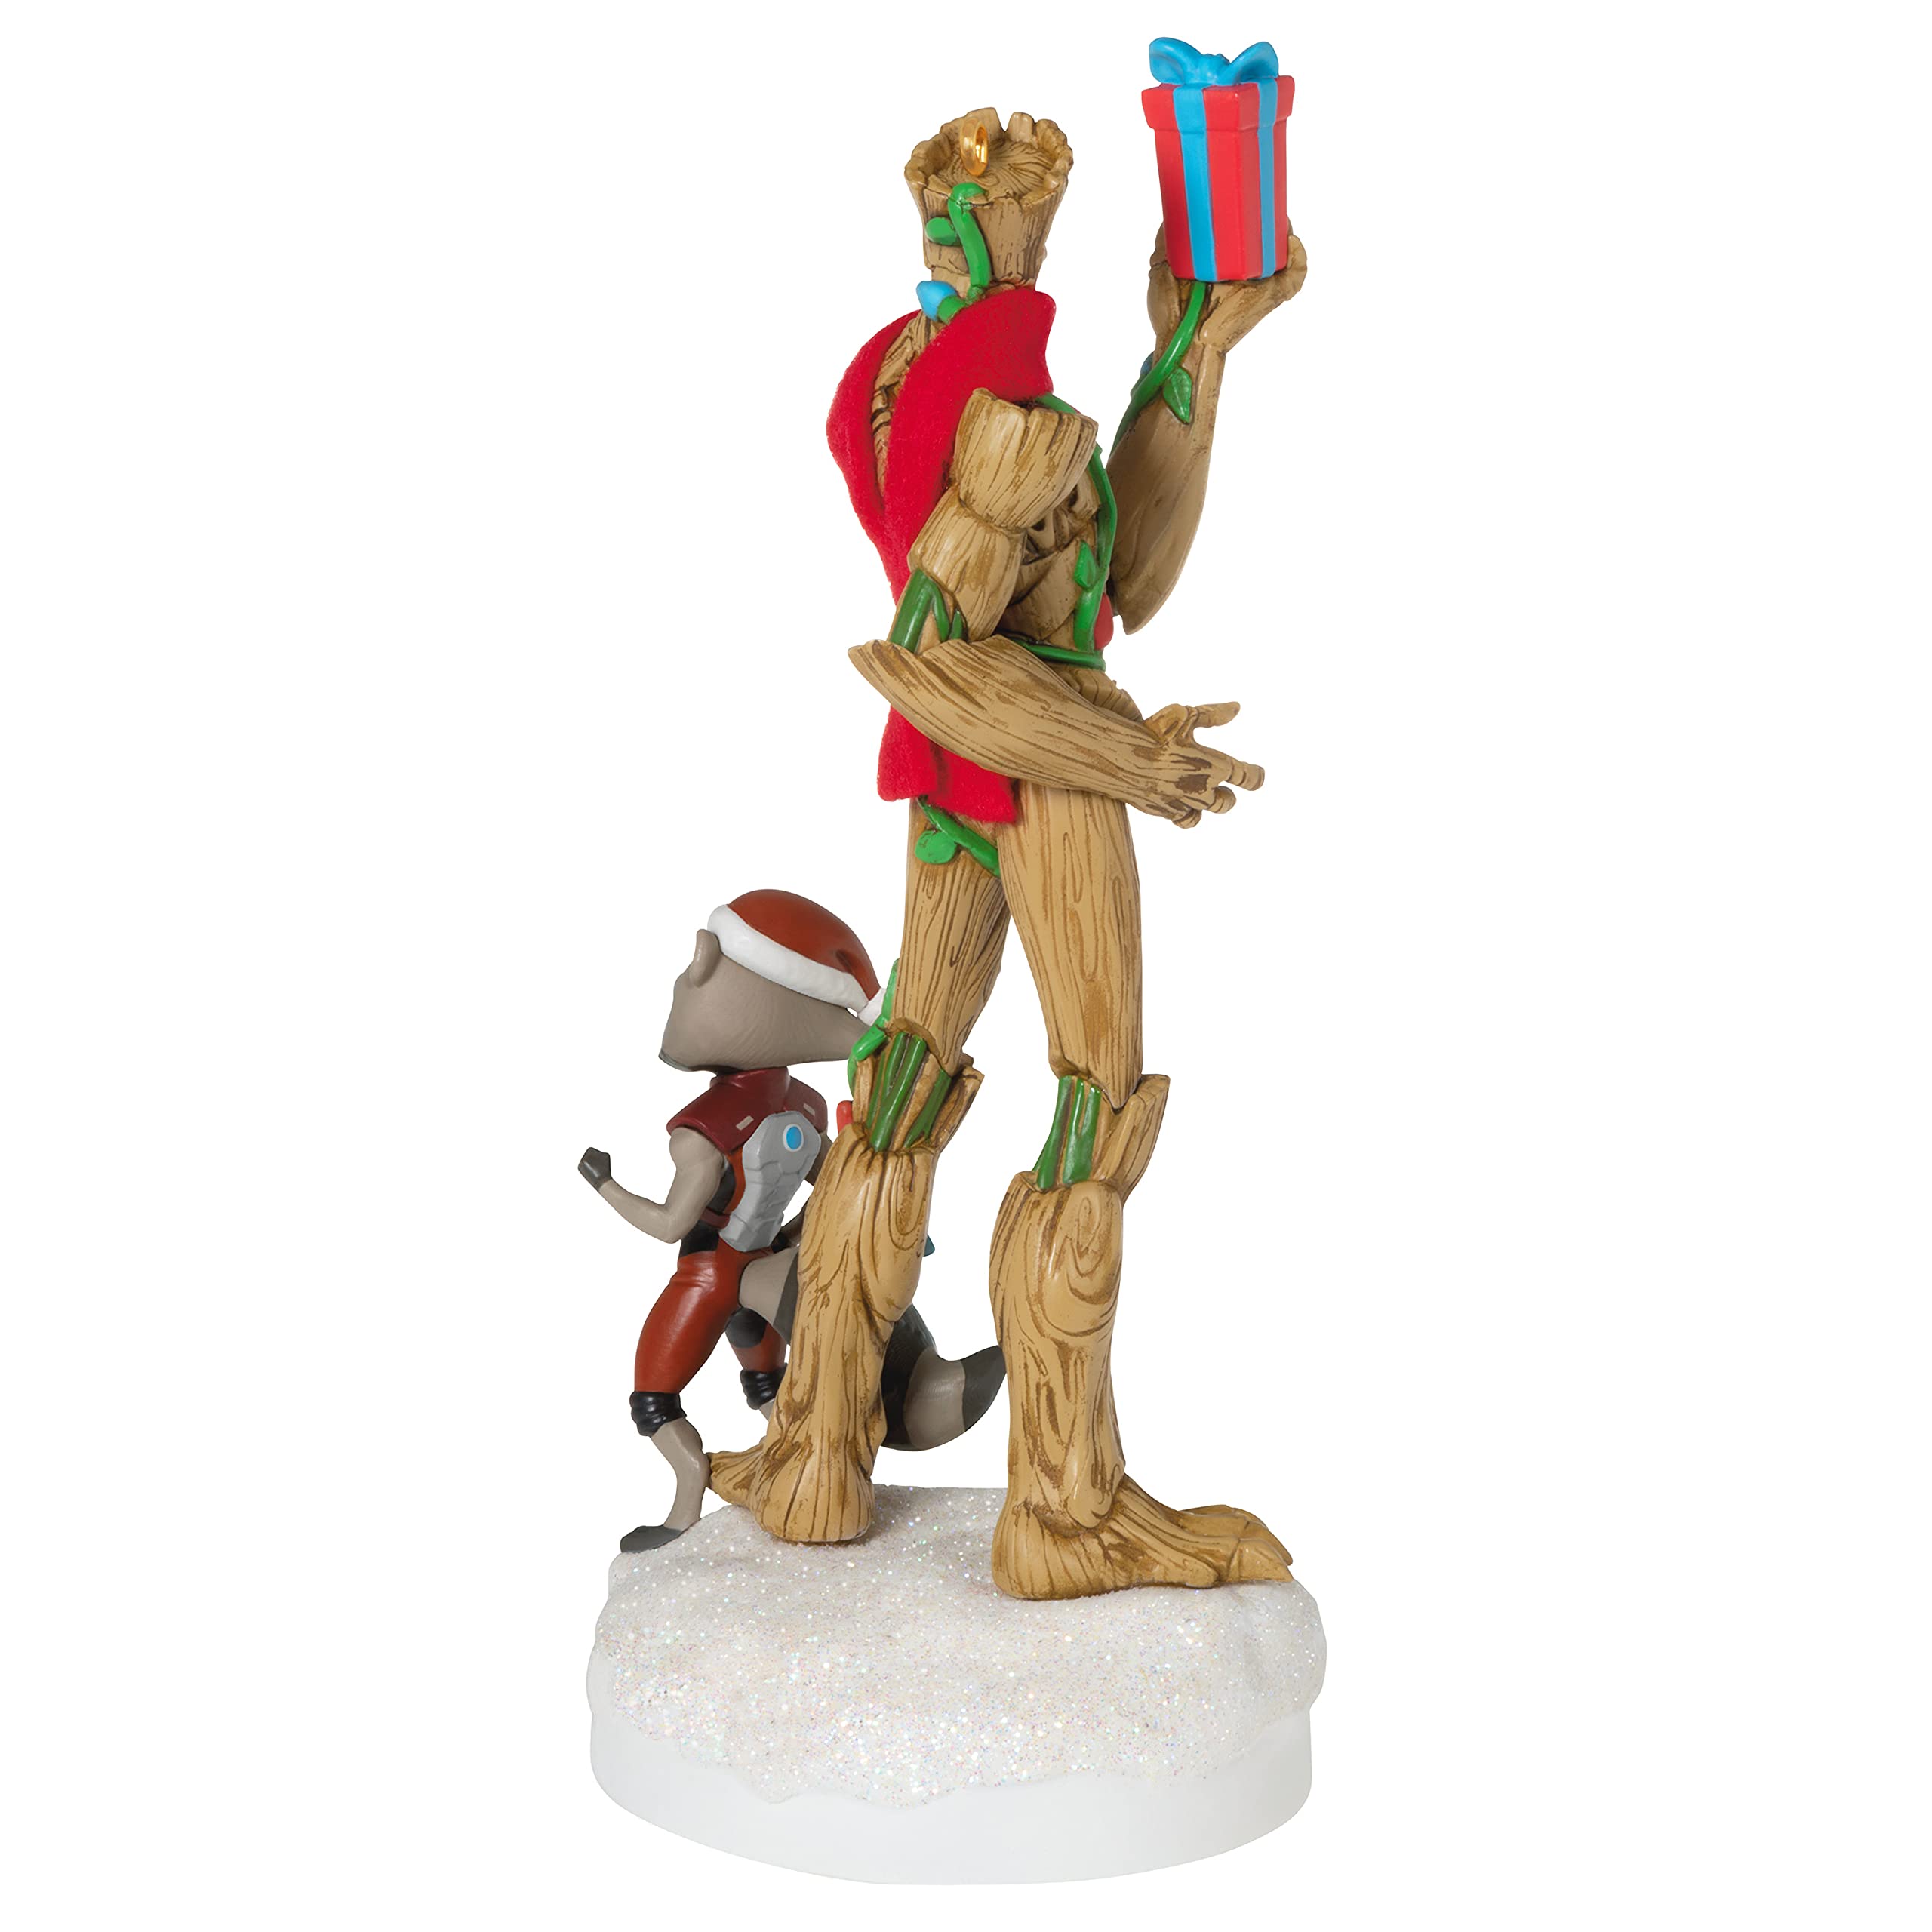 Hallmark Keepsake Christmas Ornament 2021, Marvel Guardians of The Galaxy